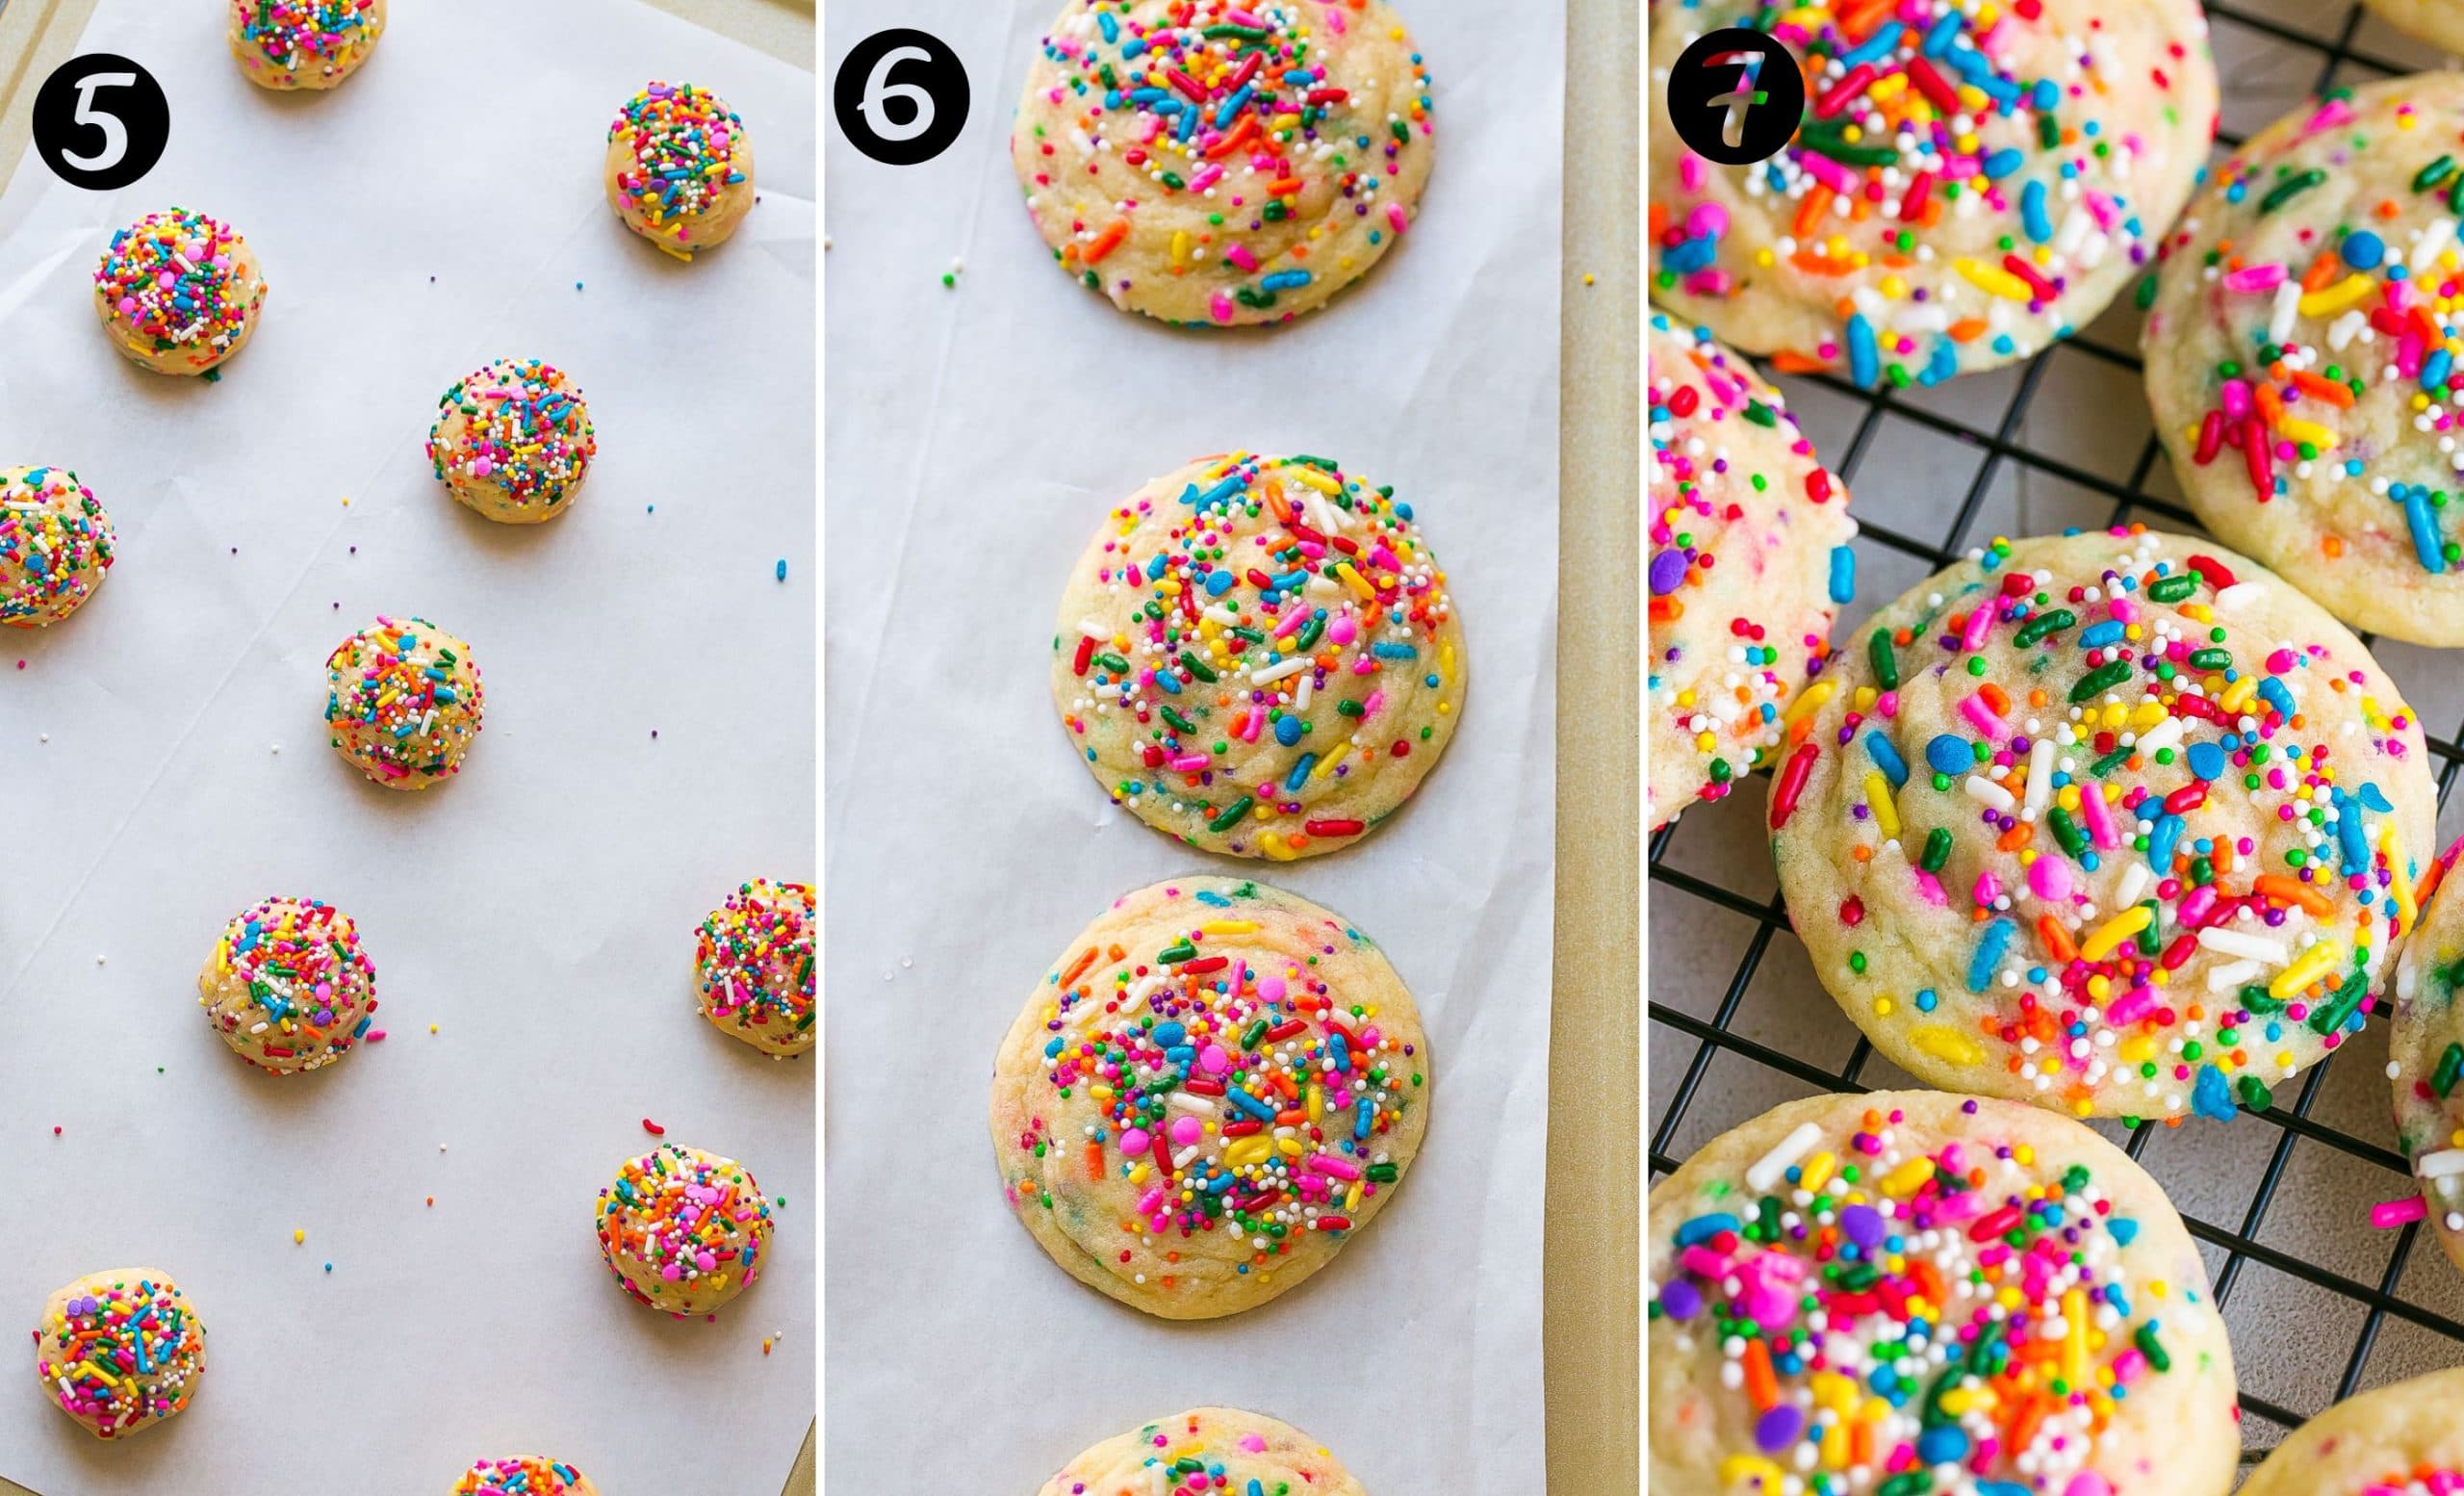 Cookie dough balls on baking sheet. 